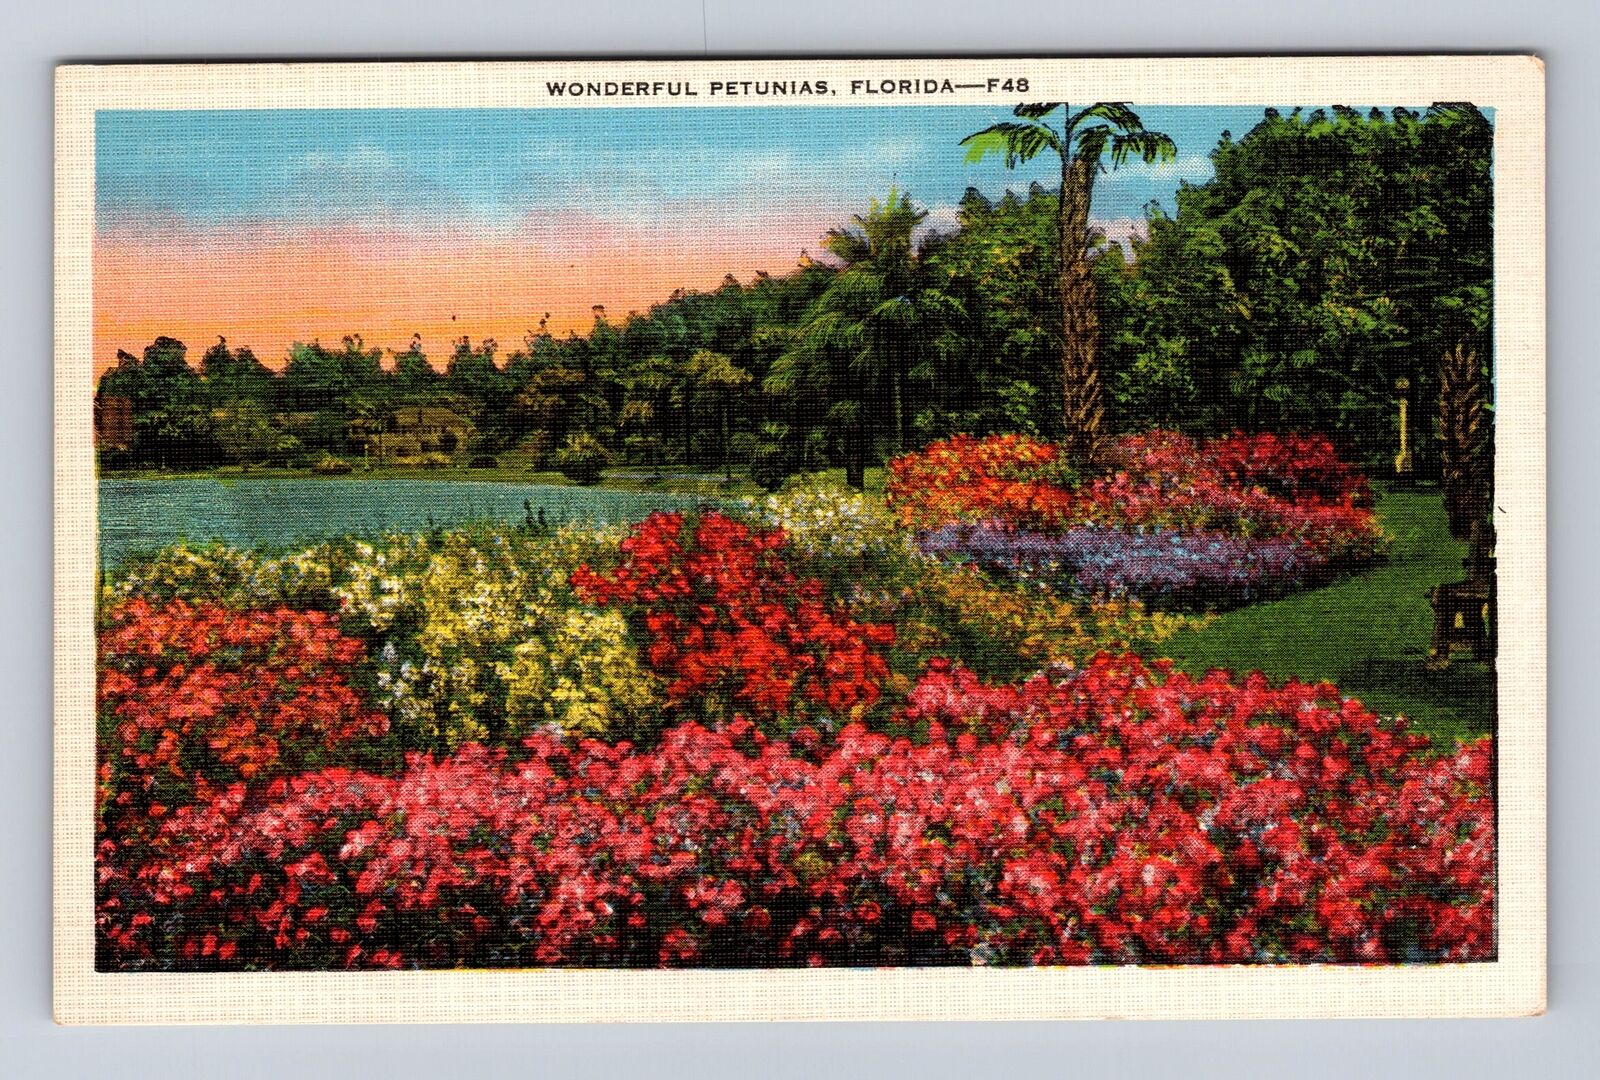 FL-Florida, Wonderful Petunias in Florida Setting, Vintage Souvenir Postcard